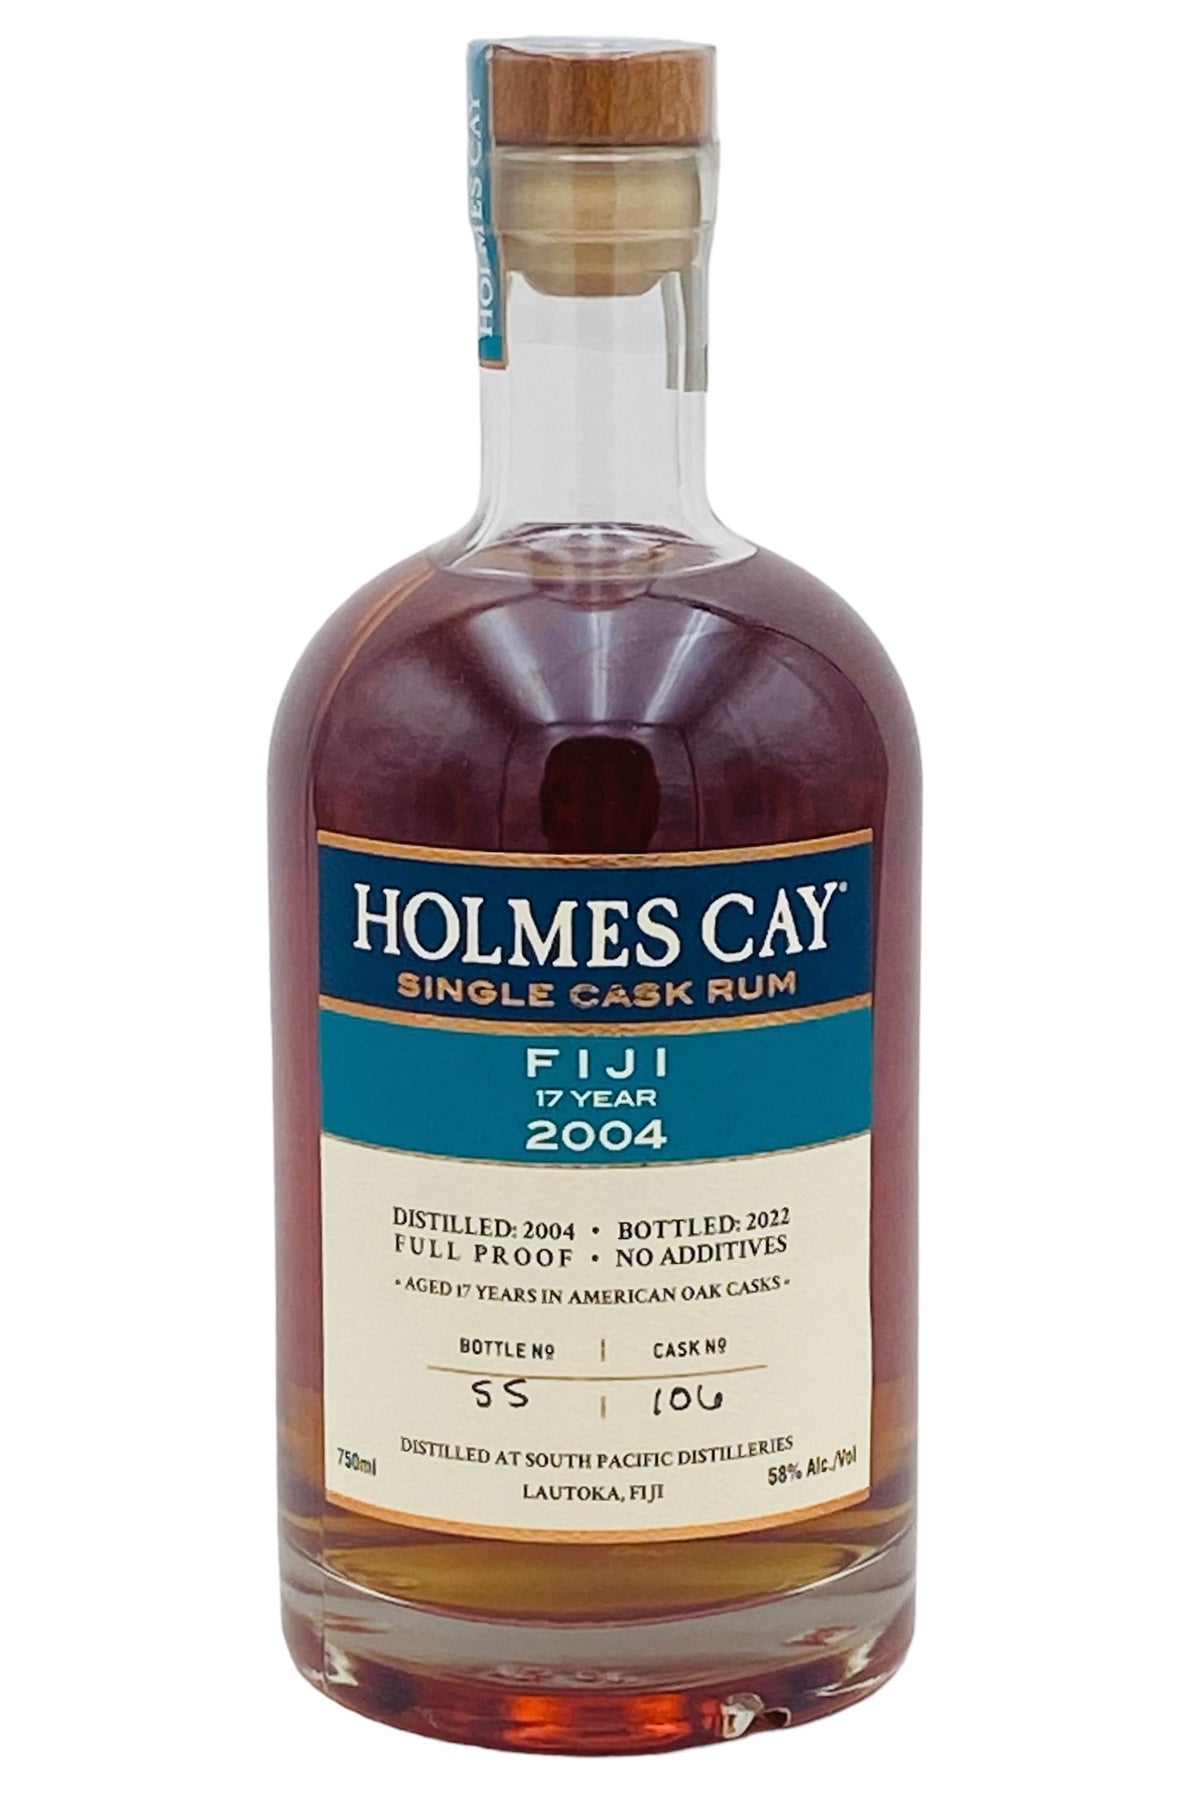 Holmes Cay 17 Year Old Single Cask Vintage 2004 Fiji Rum